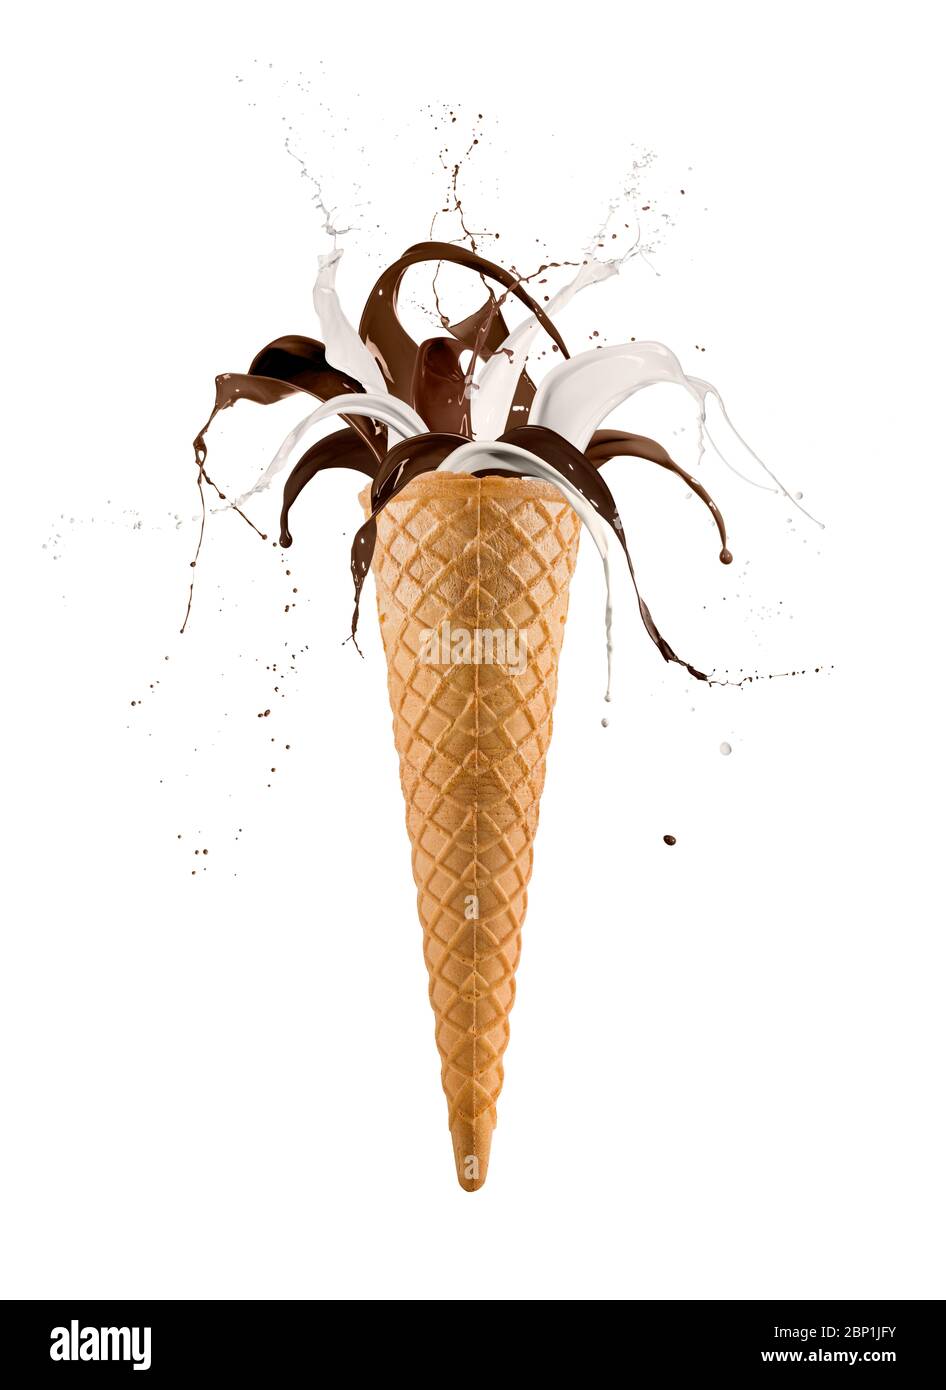 vanilla and chocolate waves splashing from ice cream cone, isolated on white background Stock Photo